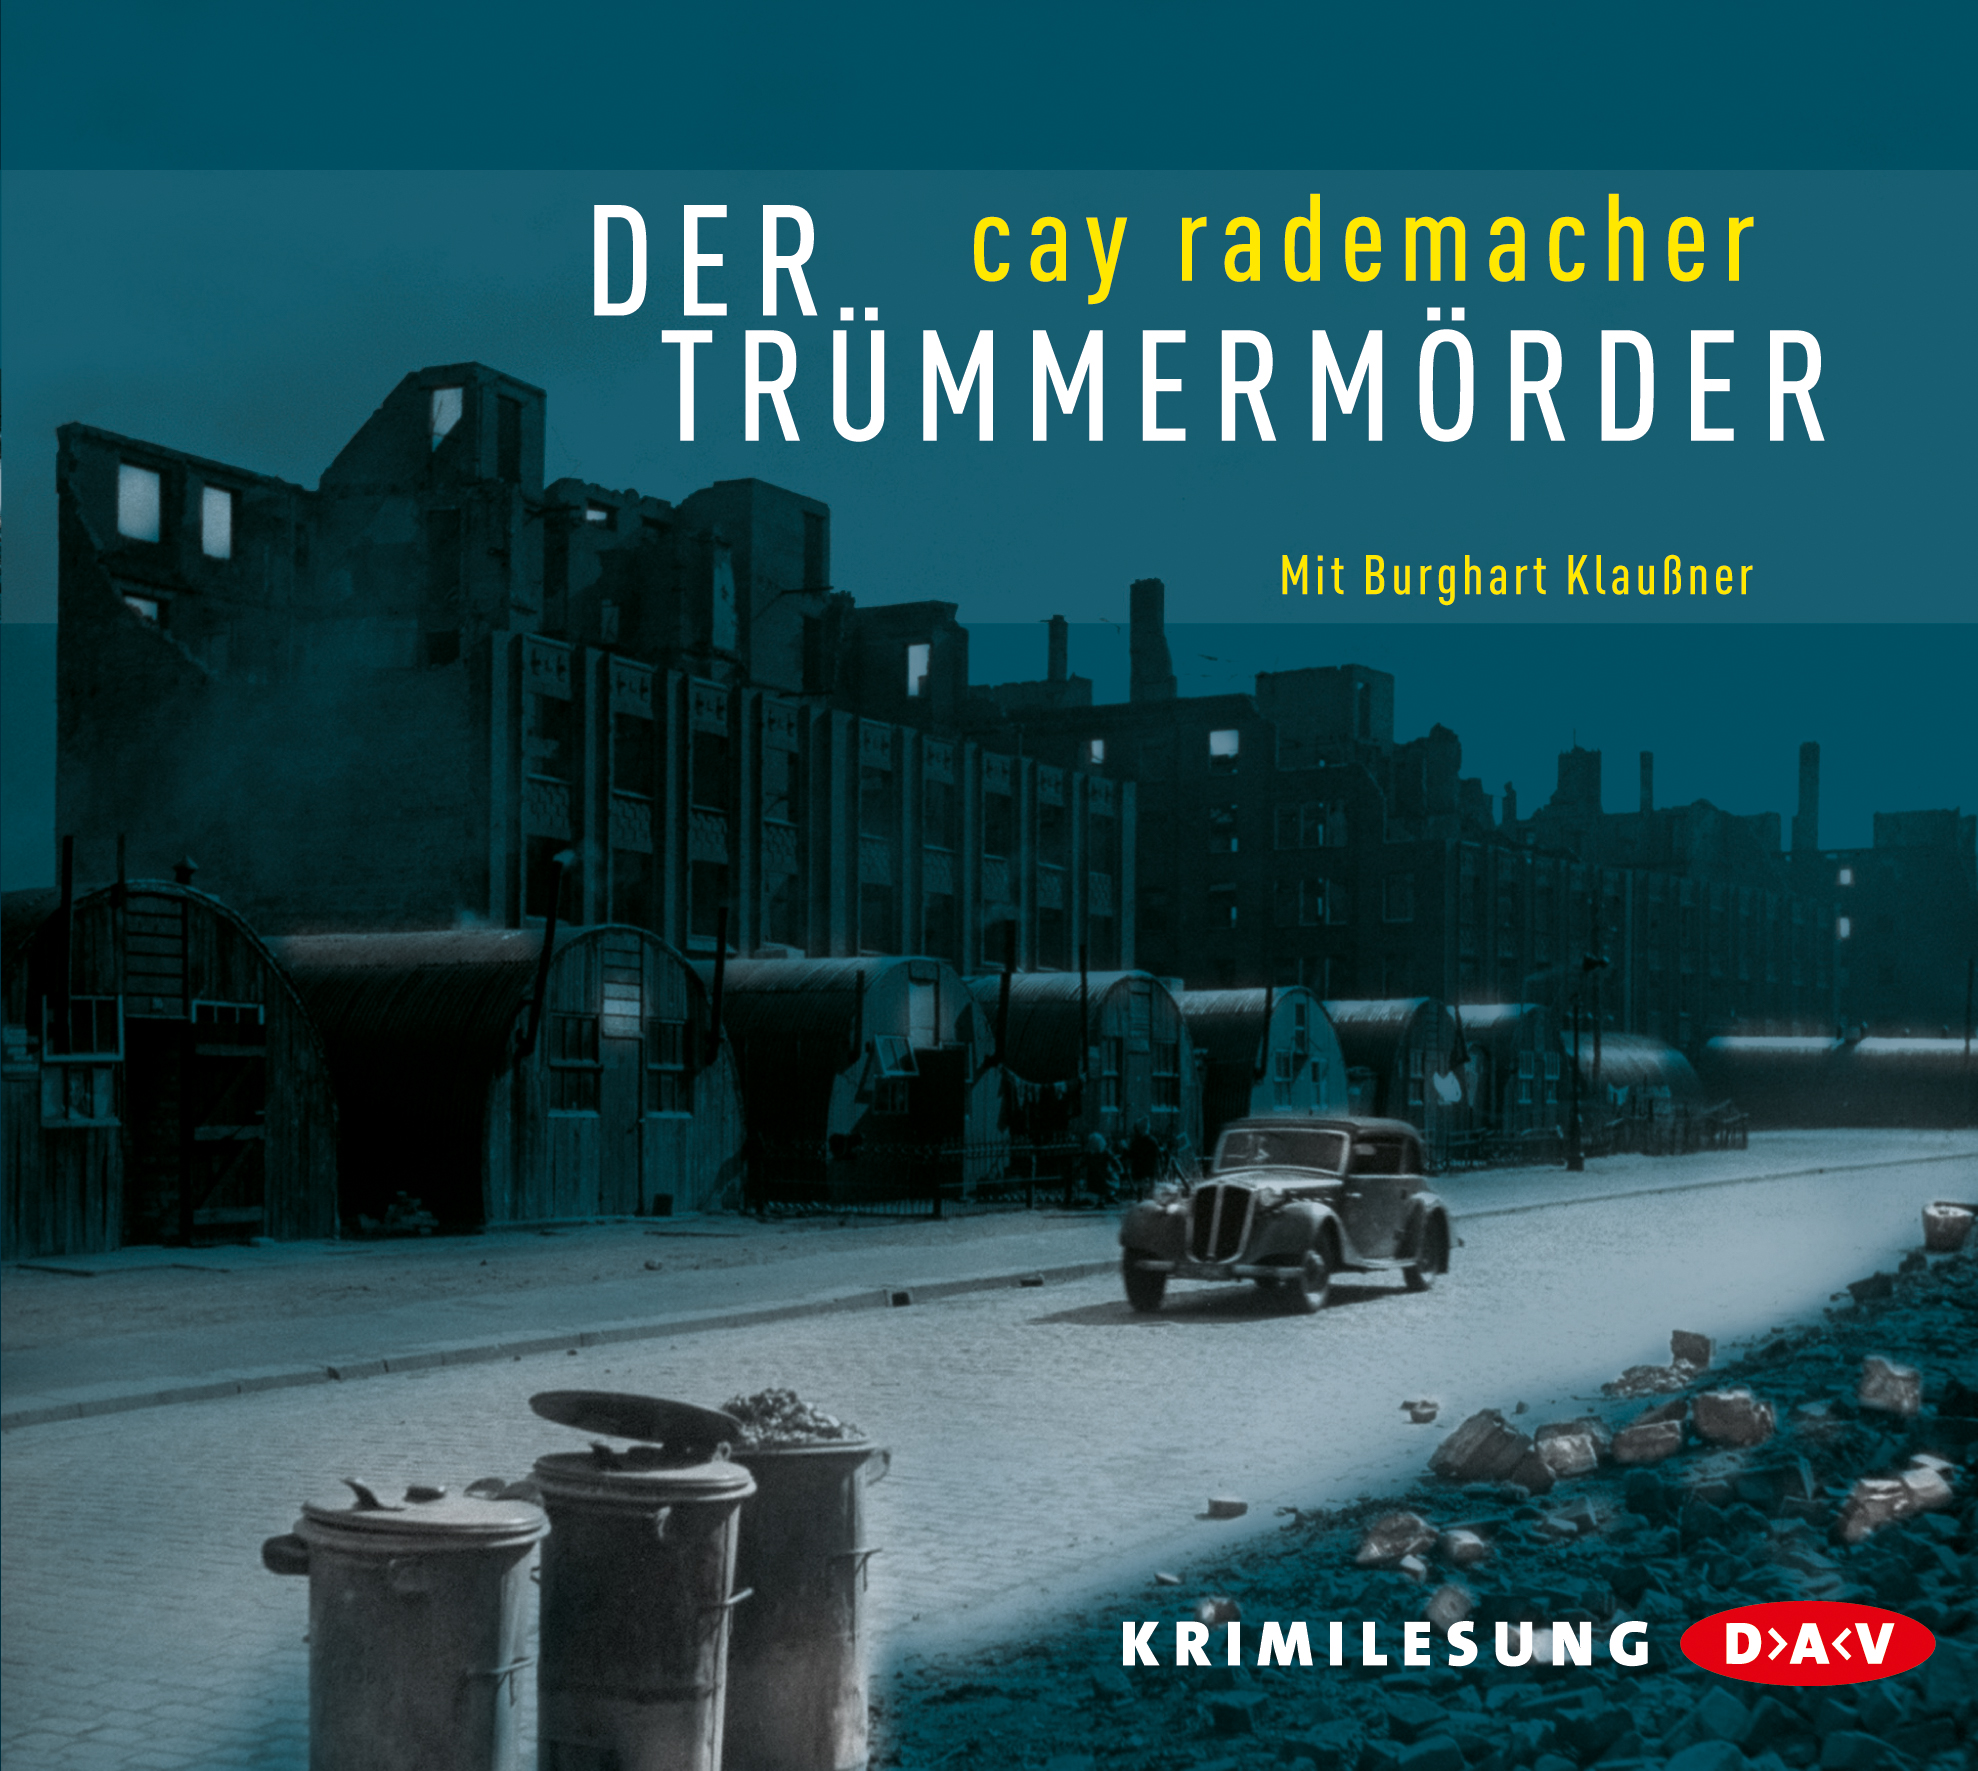 RademacherTruemmermoerderCover_VS.indd